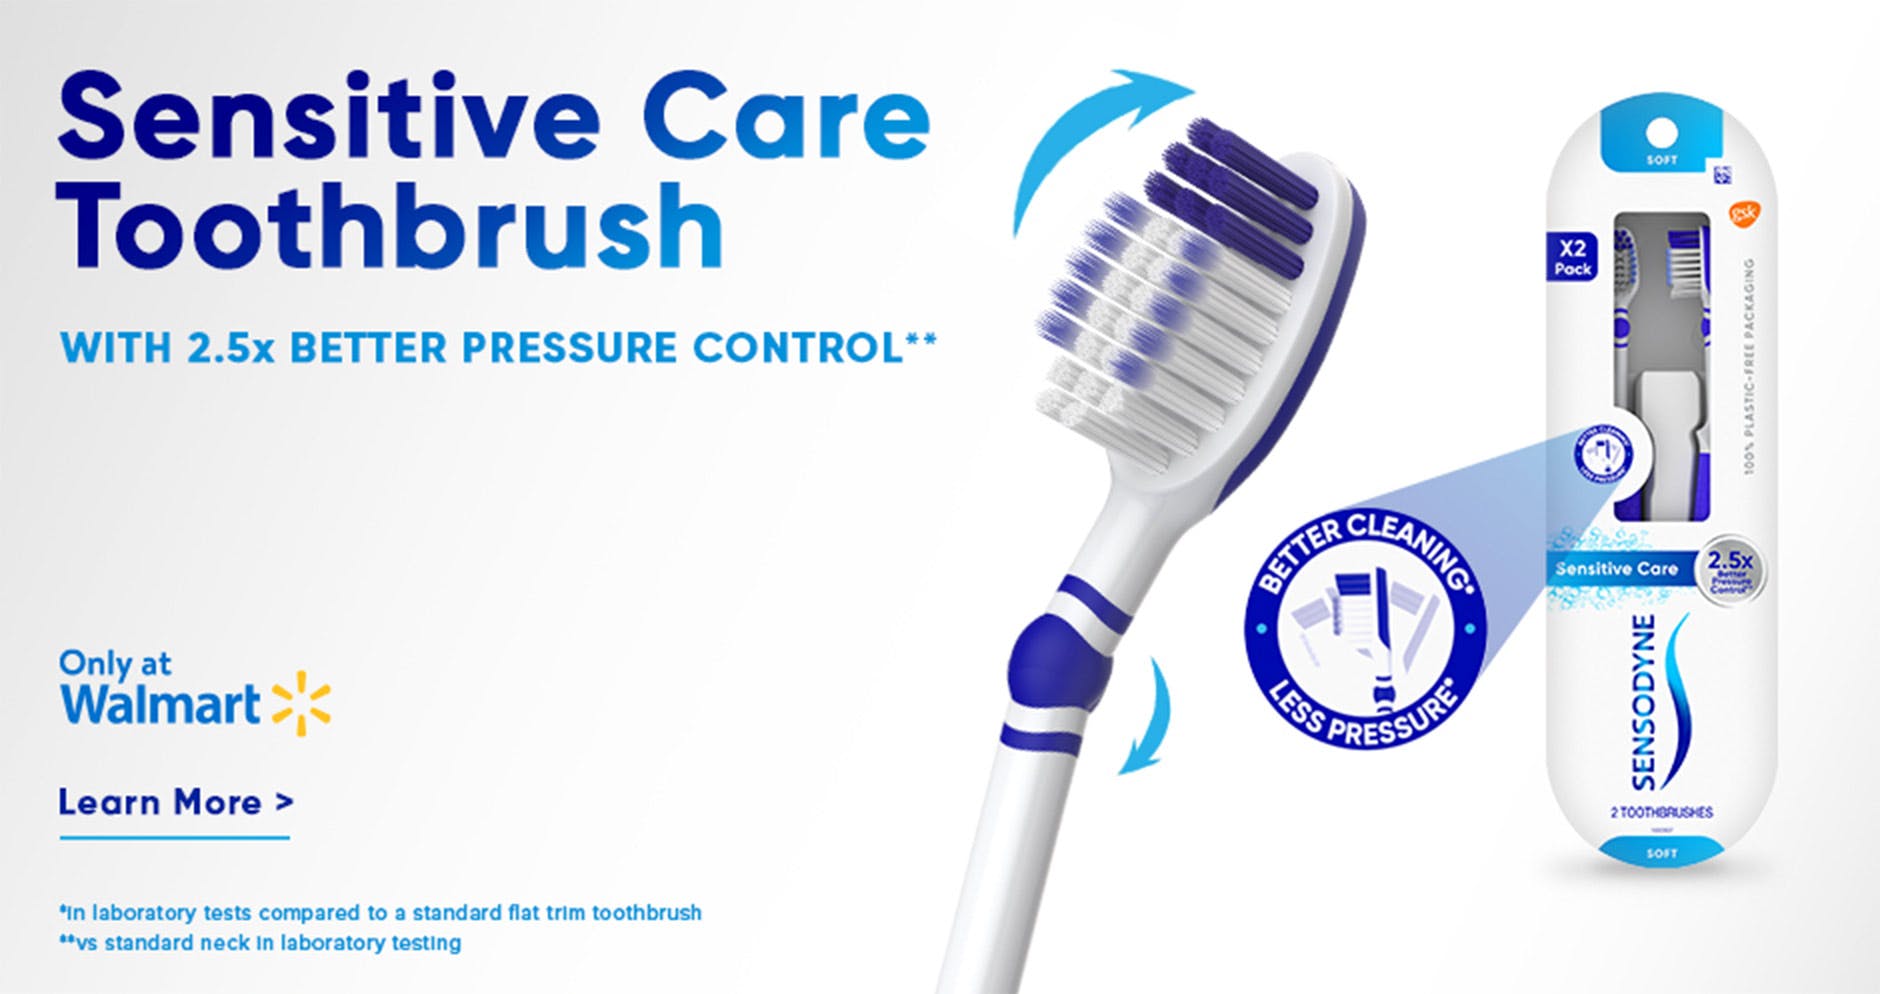 Sensodyne Sensitive Care Toothbrush close-up shot and packaging